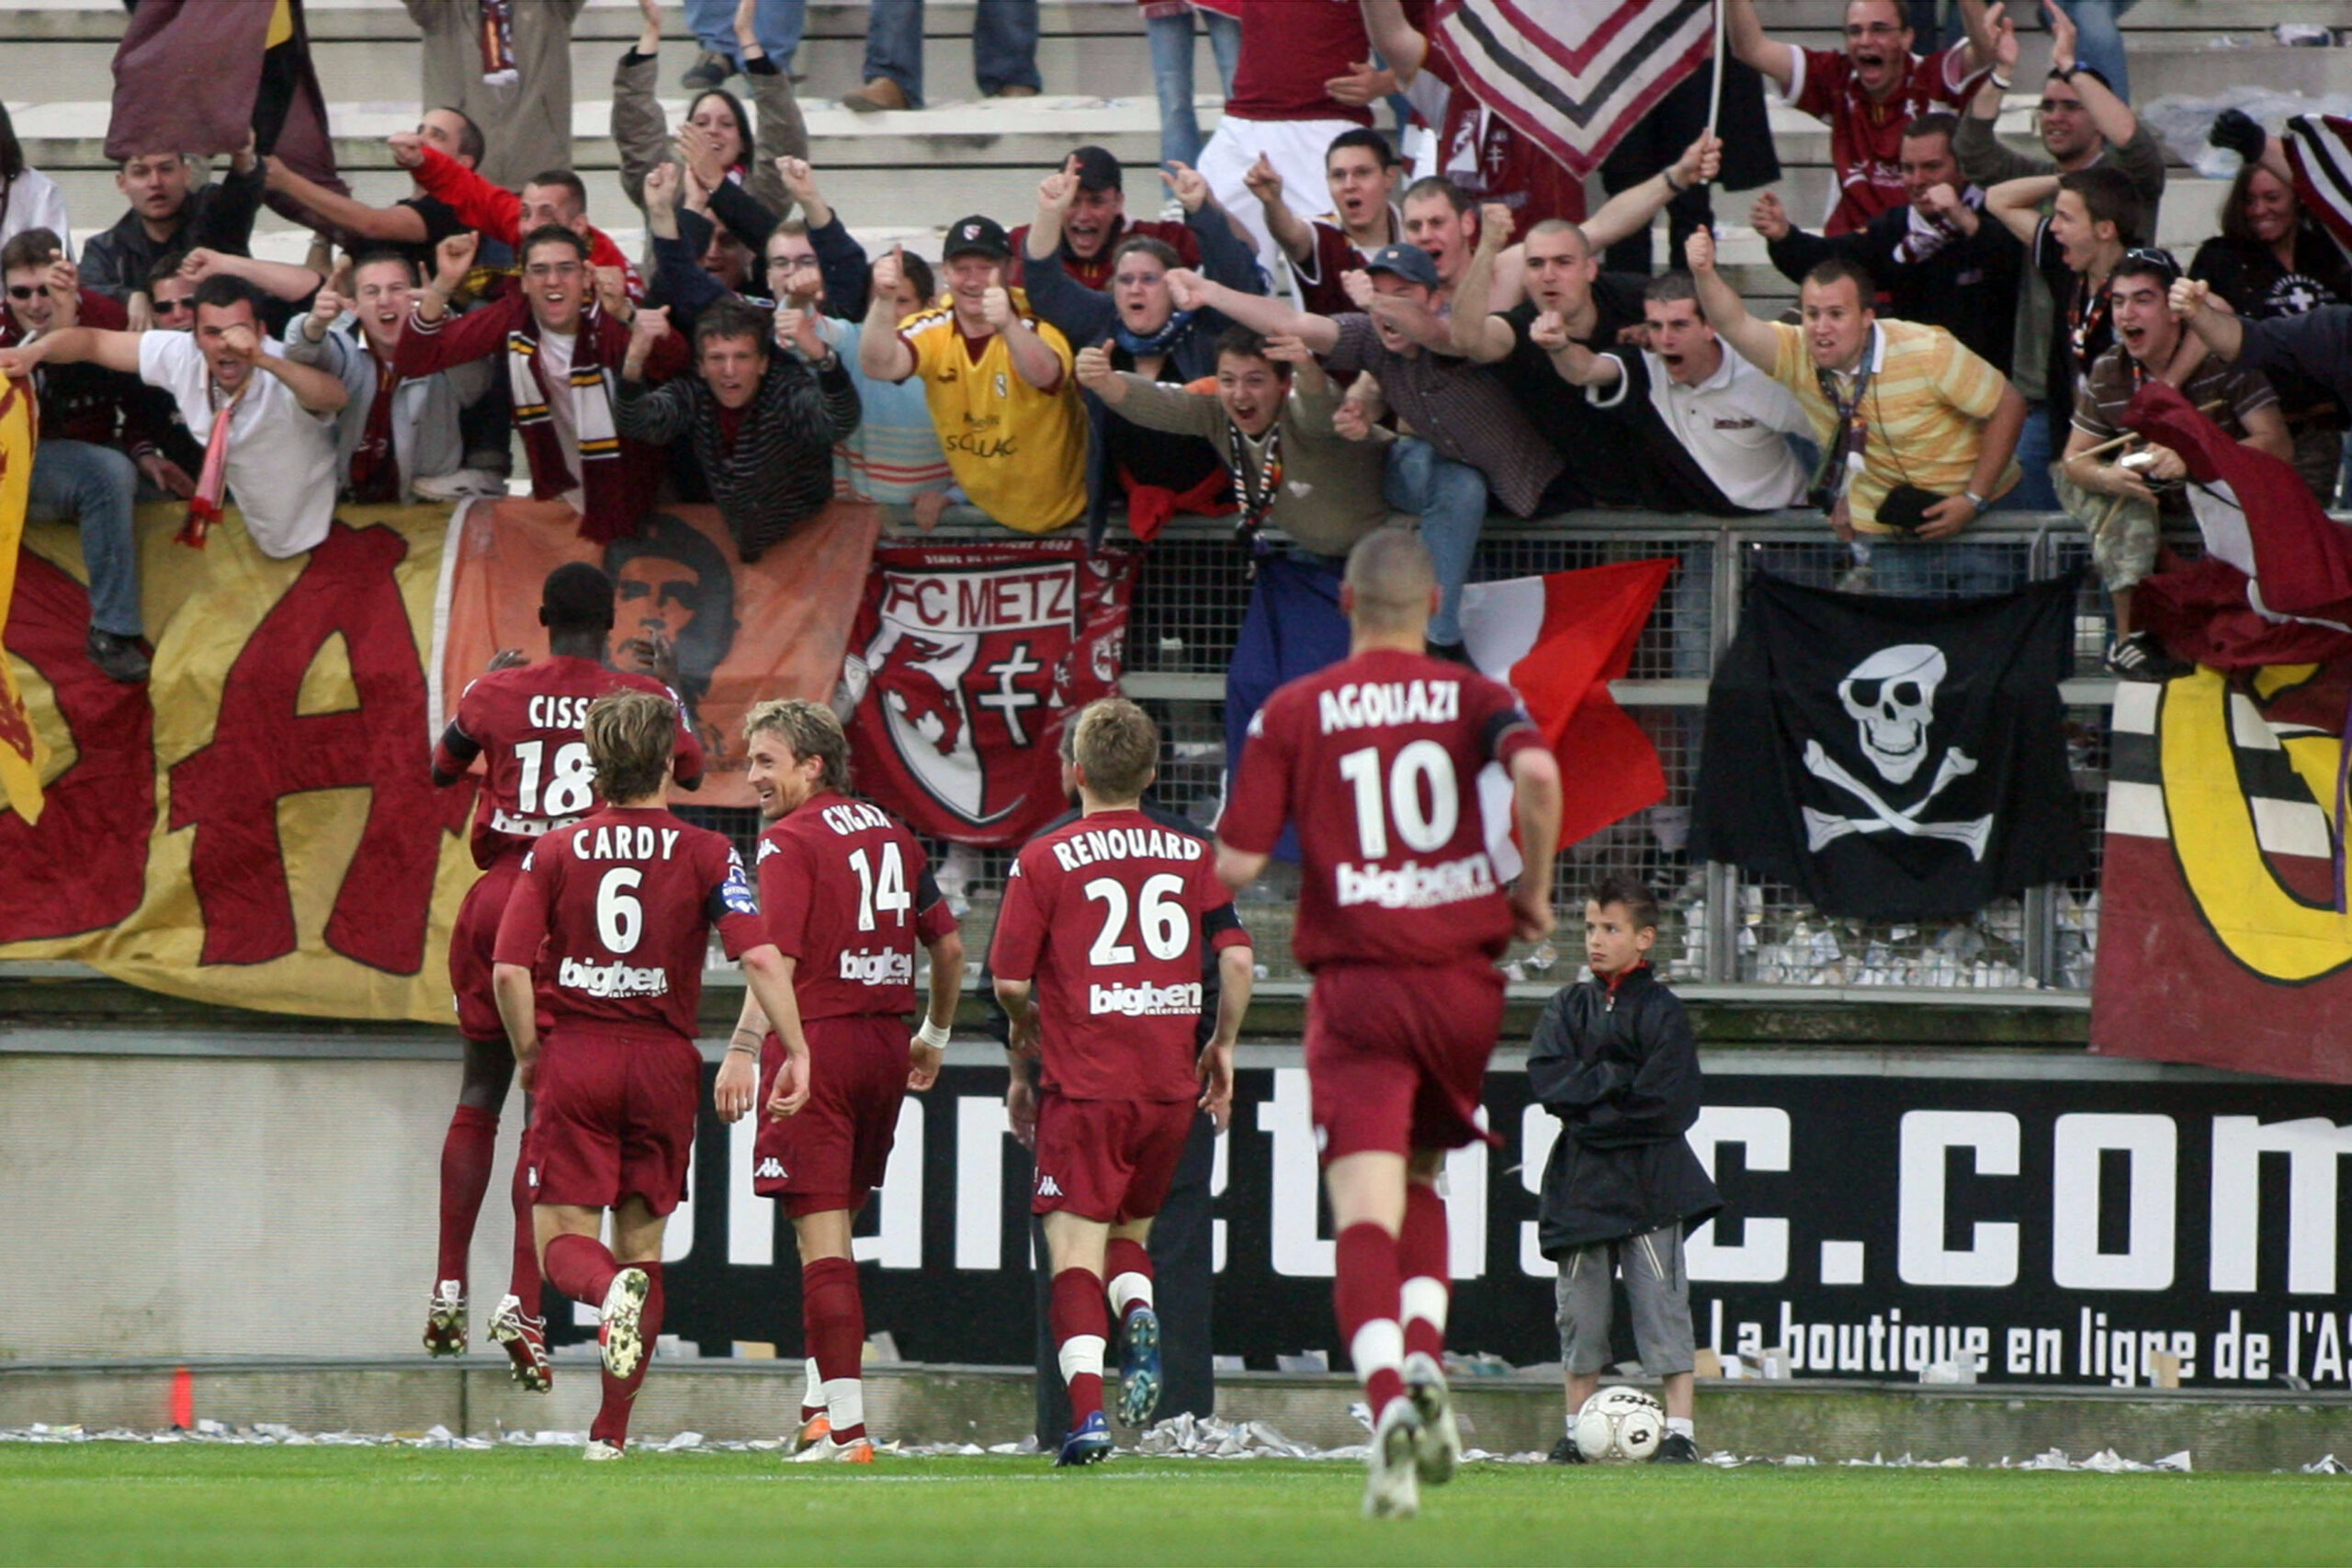 FC Metz 2007 : Que sont-ils devenus ? #1